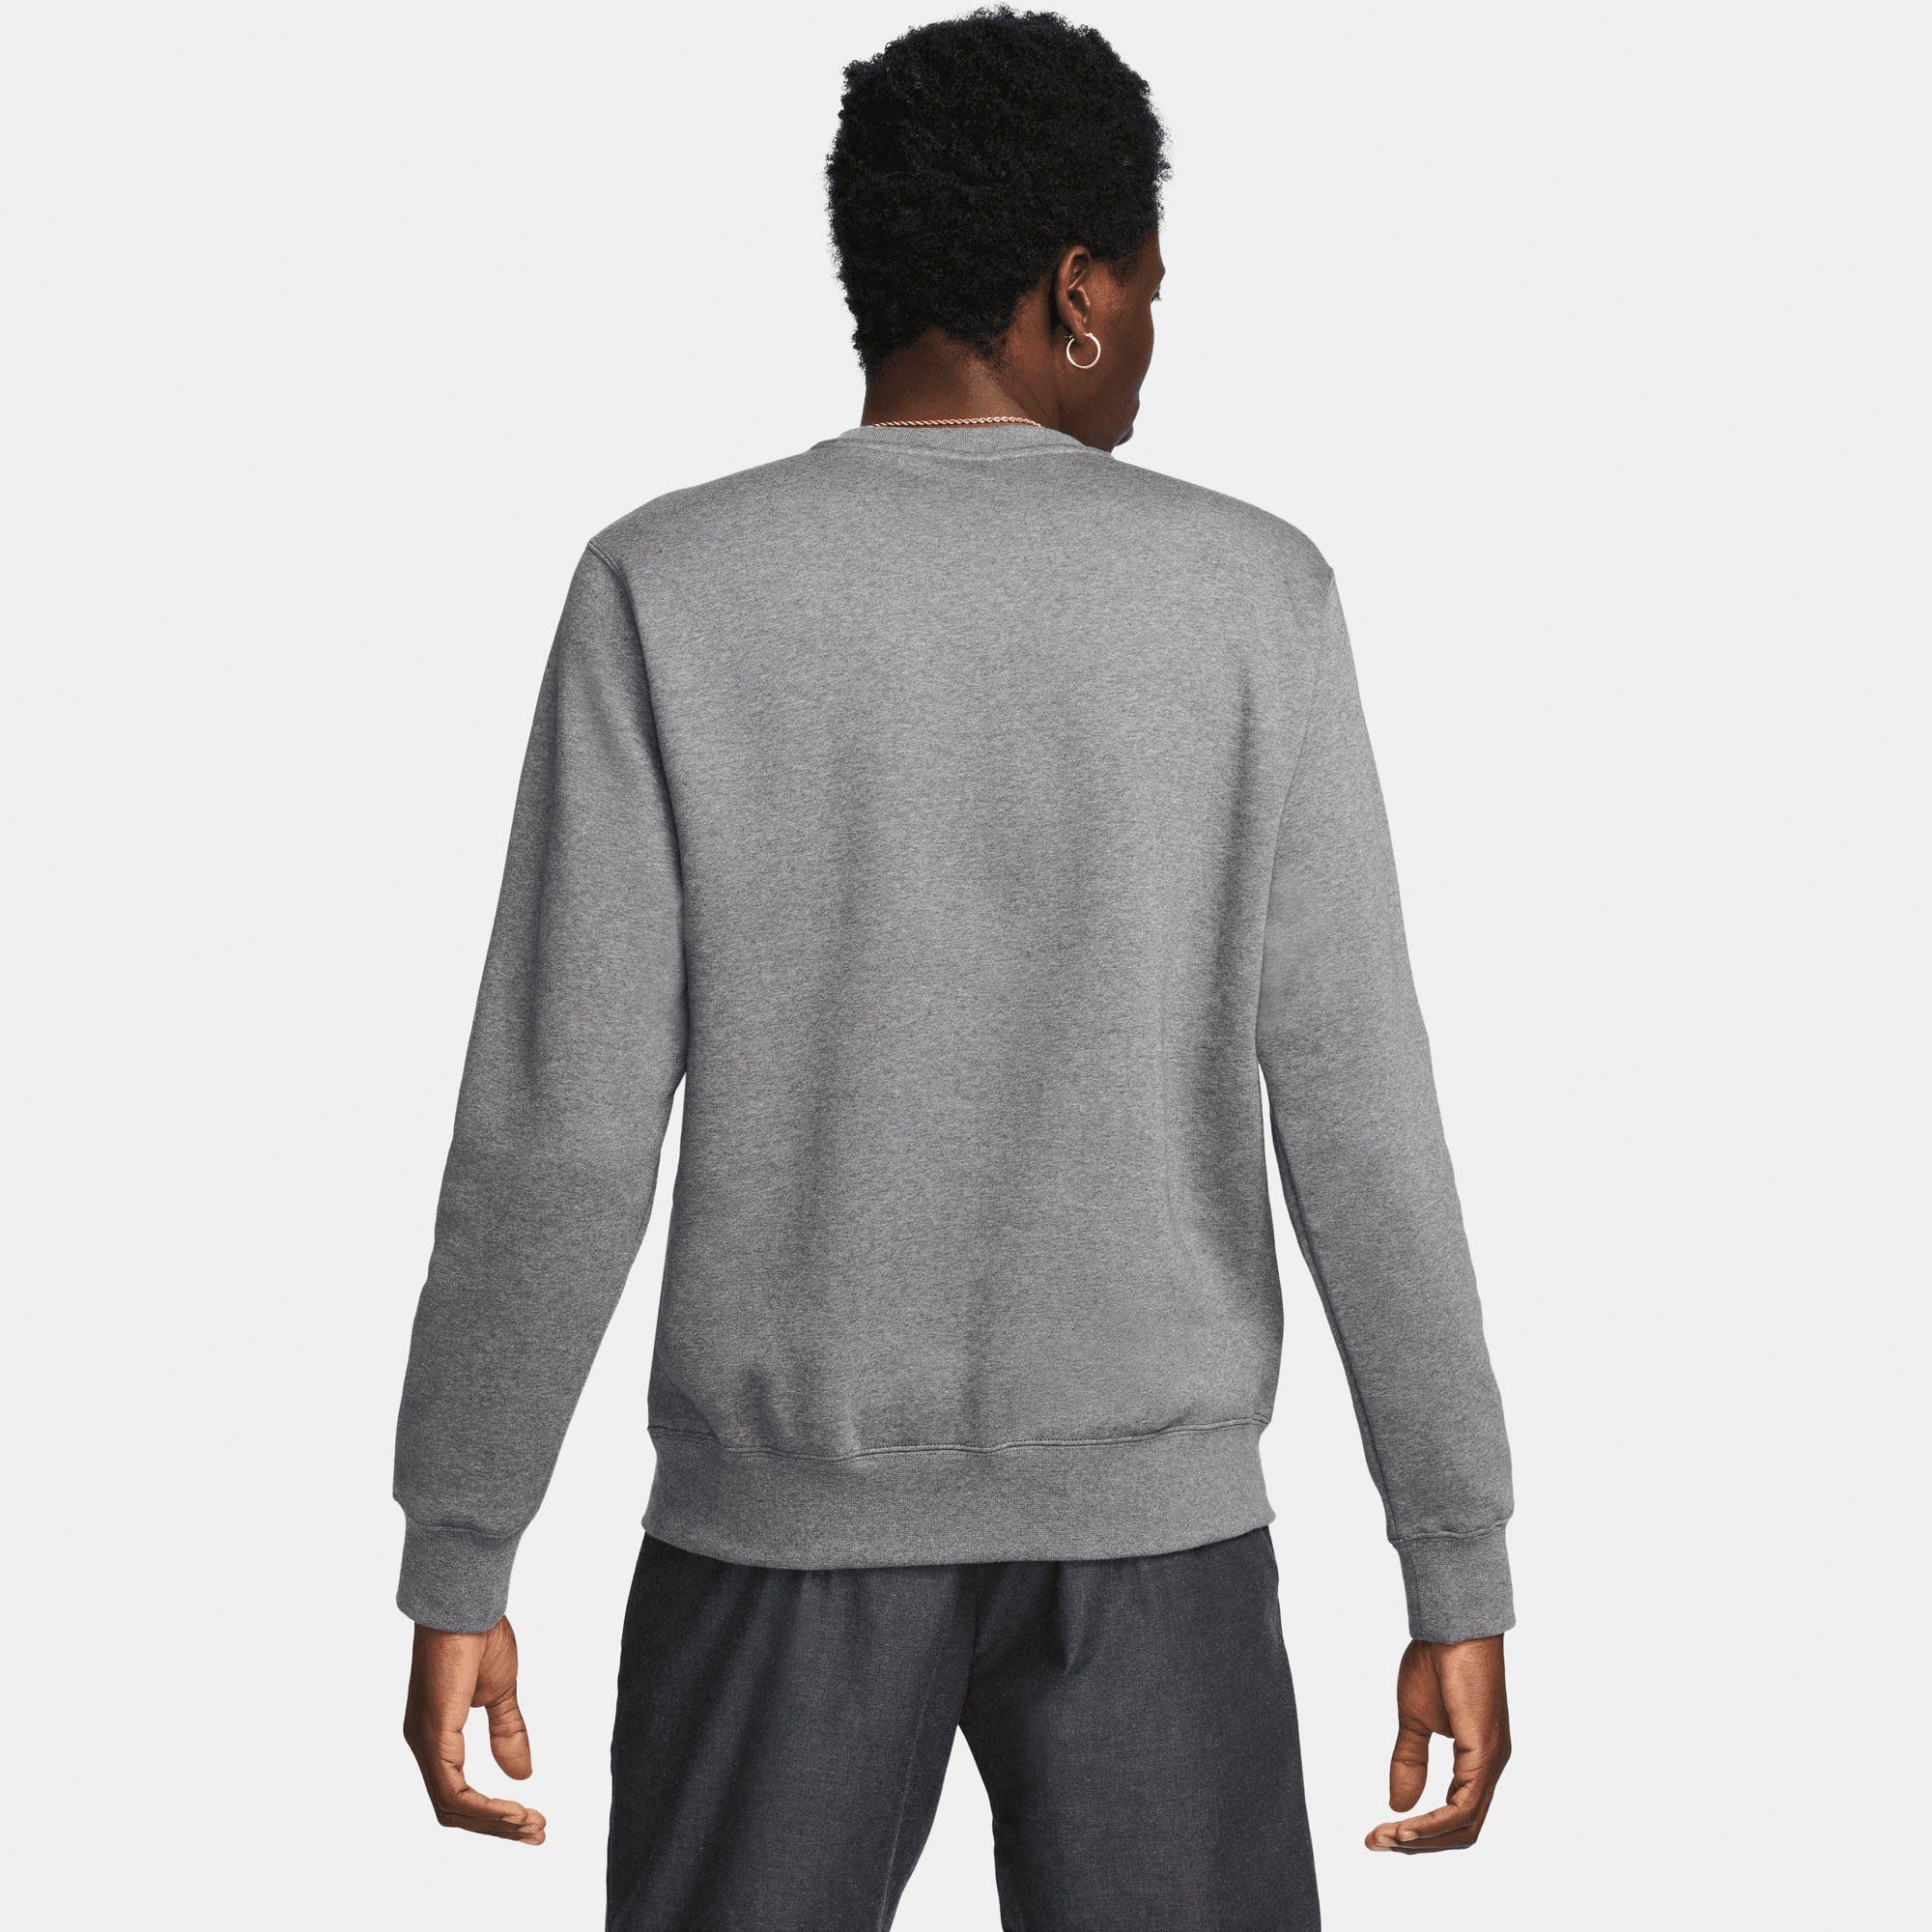 Nike Sportswear Sweatshirt Club Fleece Men's CHARCOAL Crew HEATHR Graphic